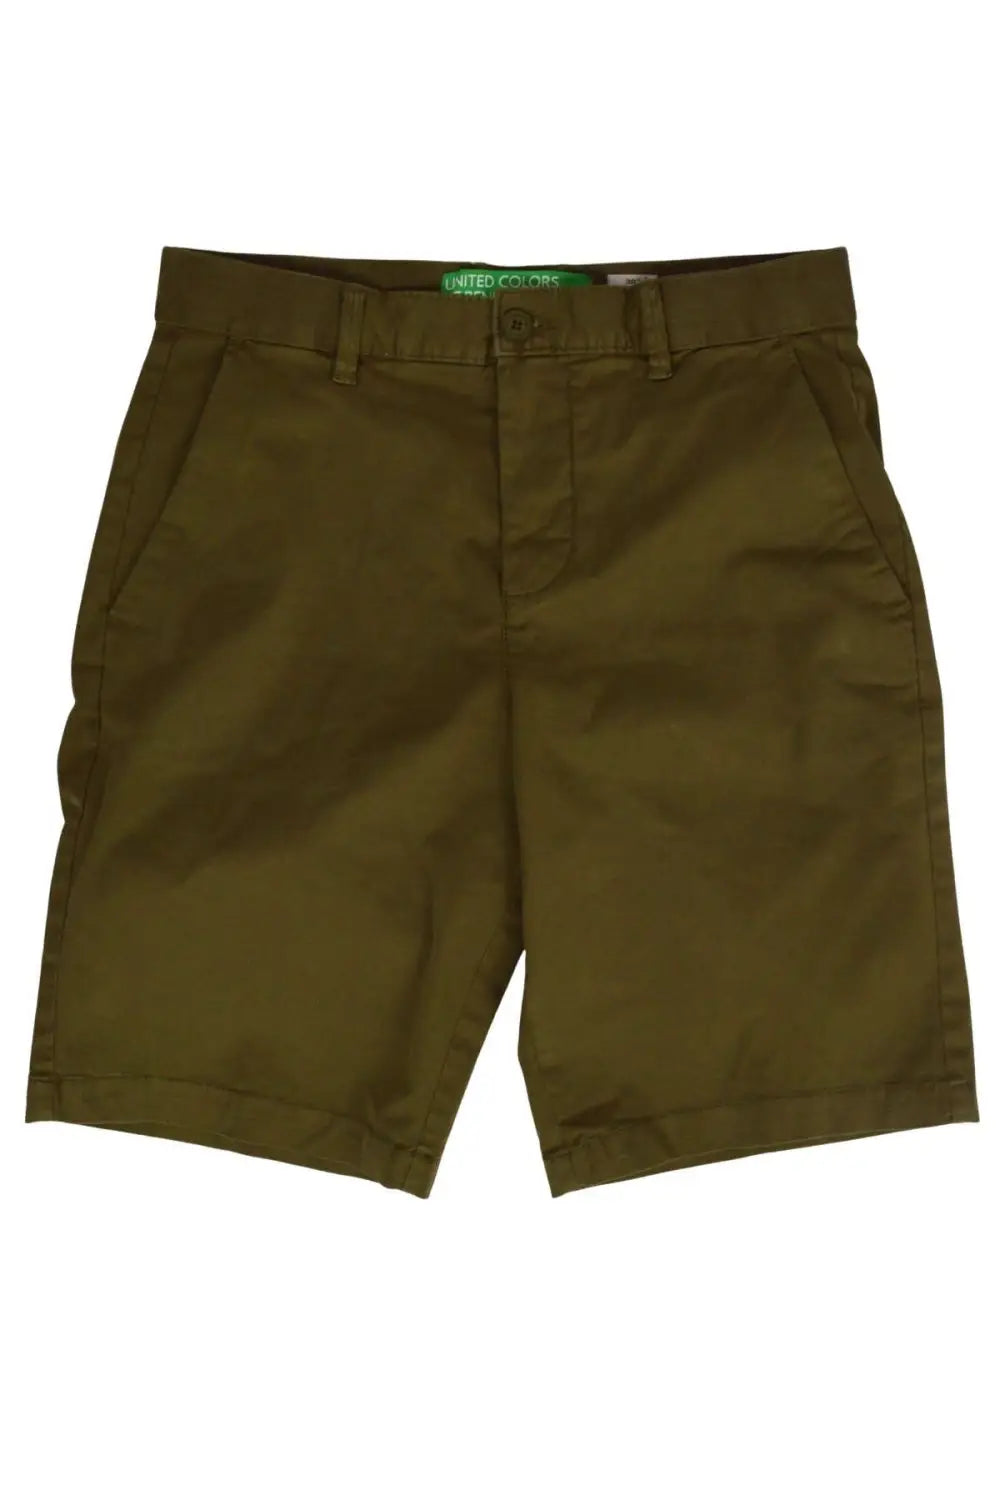 Benetton Stretch Cotton Chino Shorts